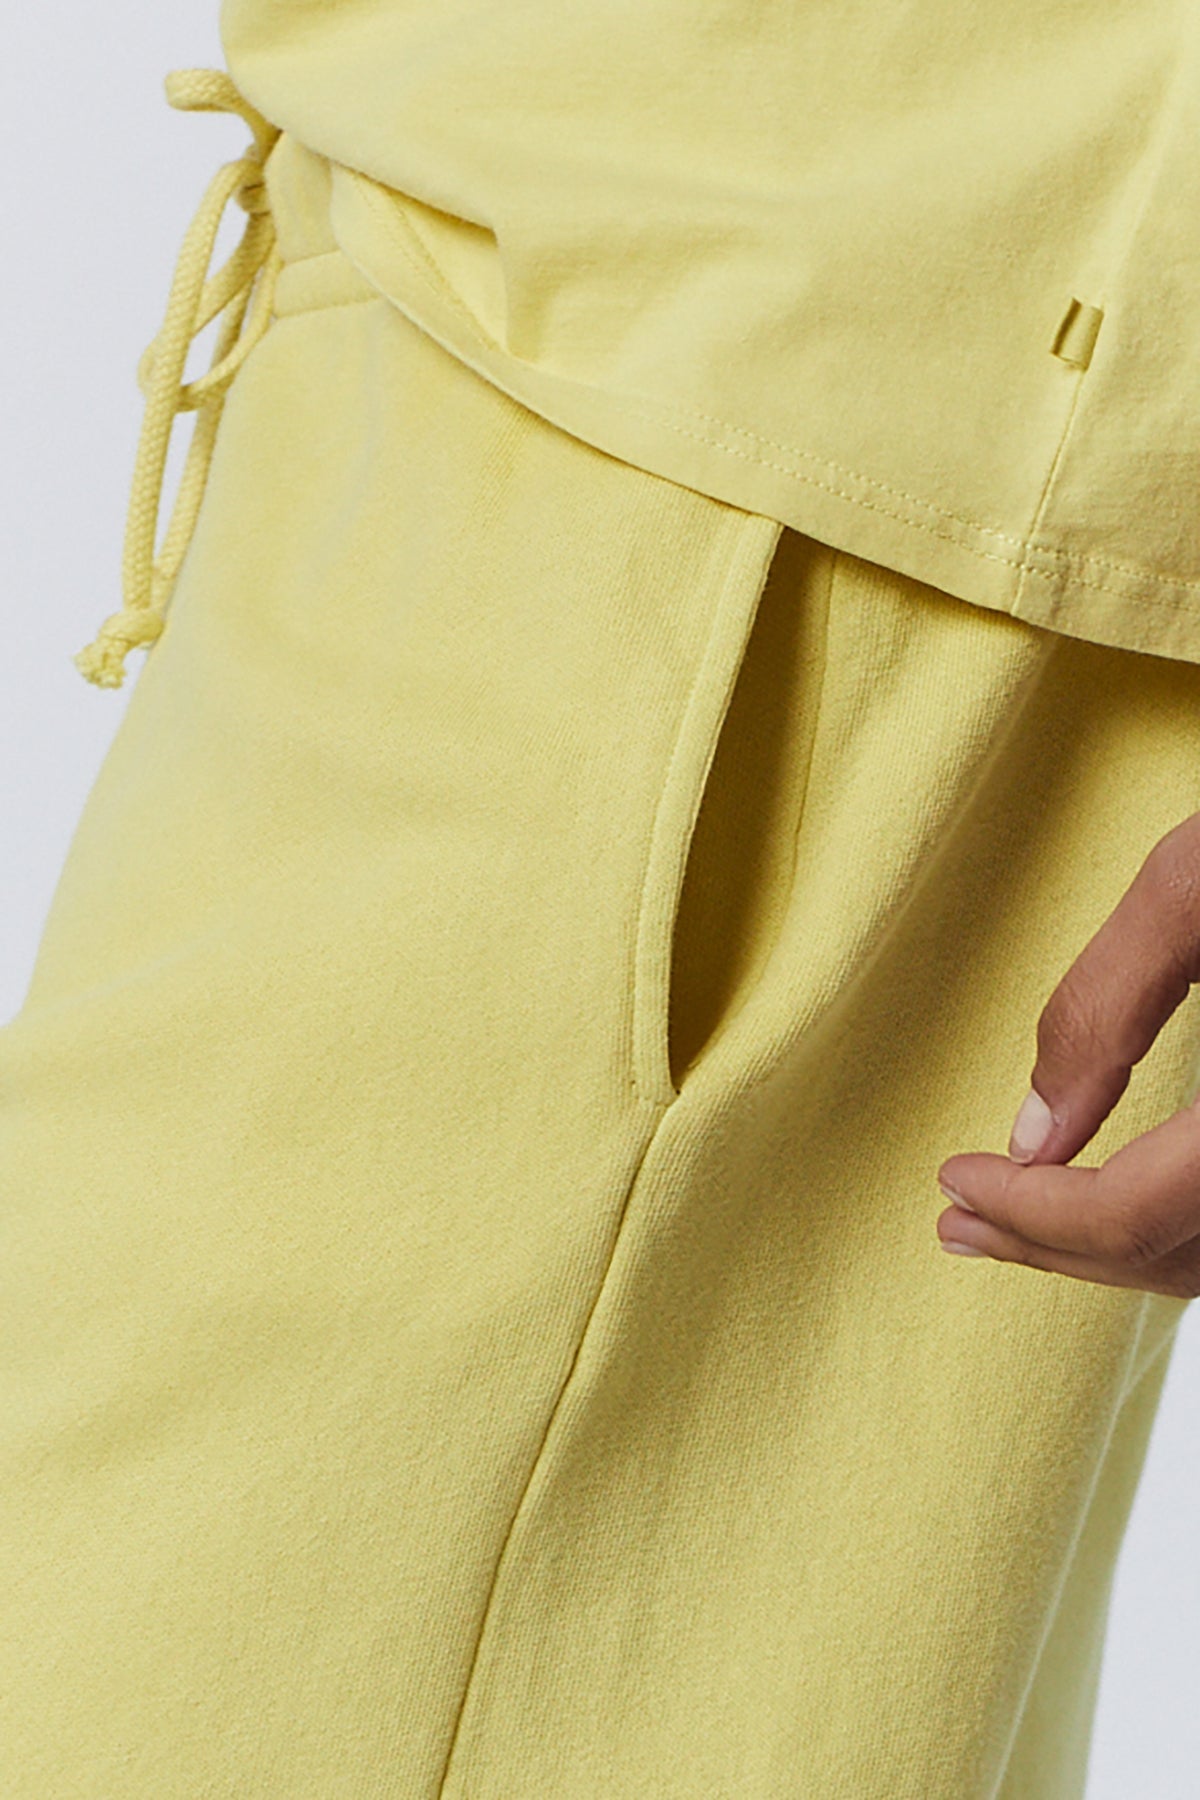 Montecito Sweatpant in lemon yellow side pocket detail-26631042138305